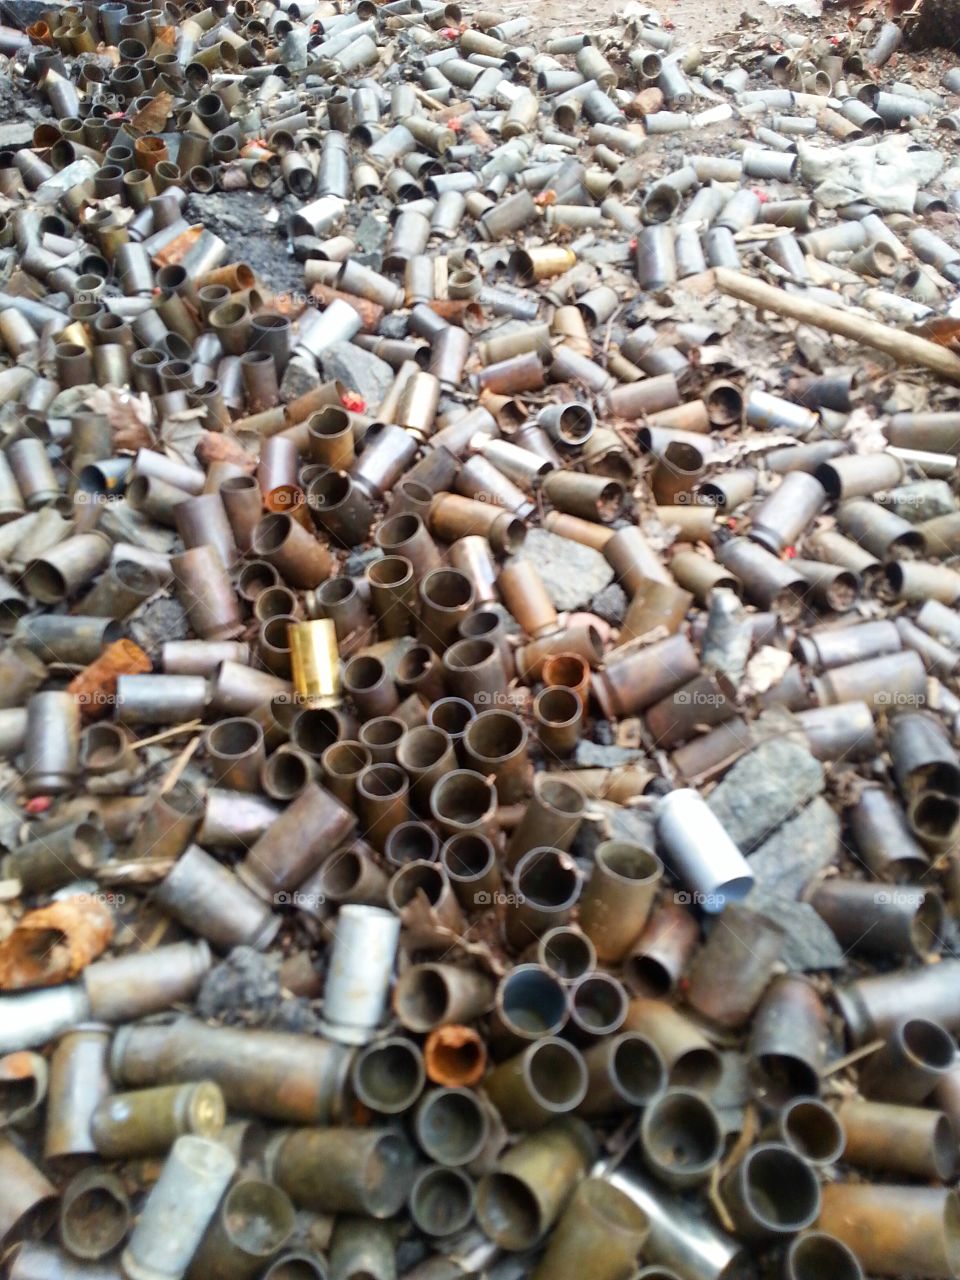 Gunfire bullet shell remnants. scattered on the gun range grounds, serious ammo